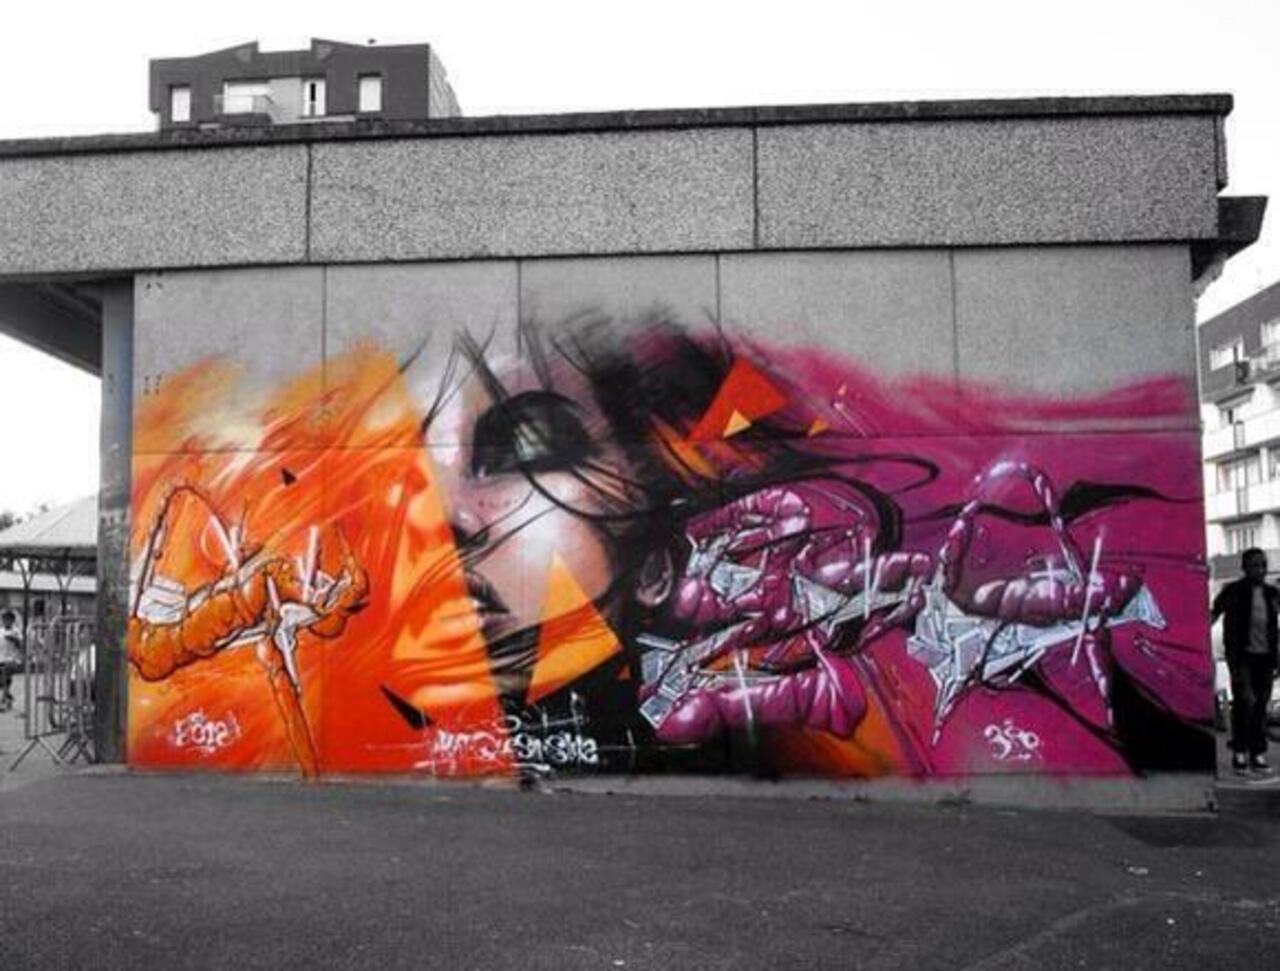 RT @designopinion: Colab of Sly2, Kat, Quesa Street Art wall in Paris, France #art #mural #graffiti #streetart http://t.co/y2QYWVPYfi